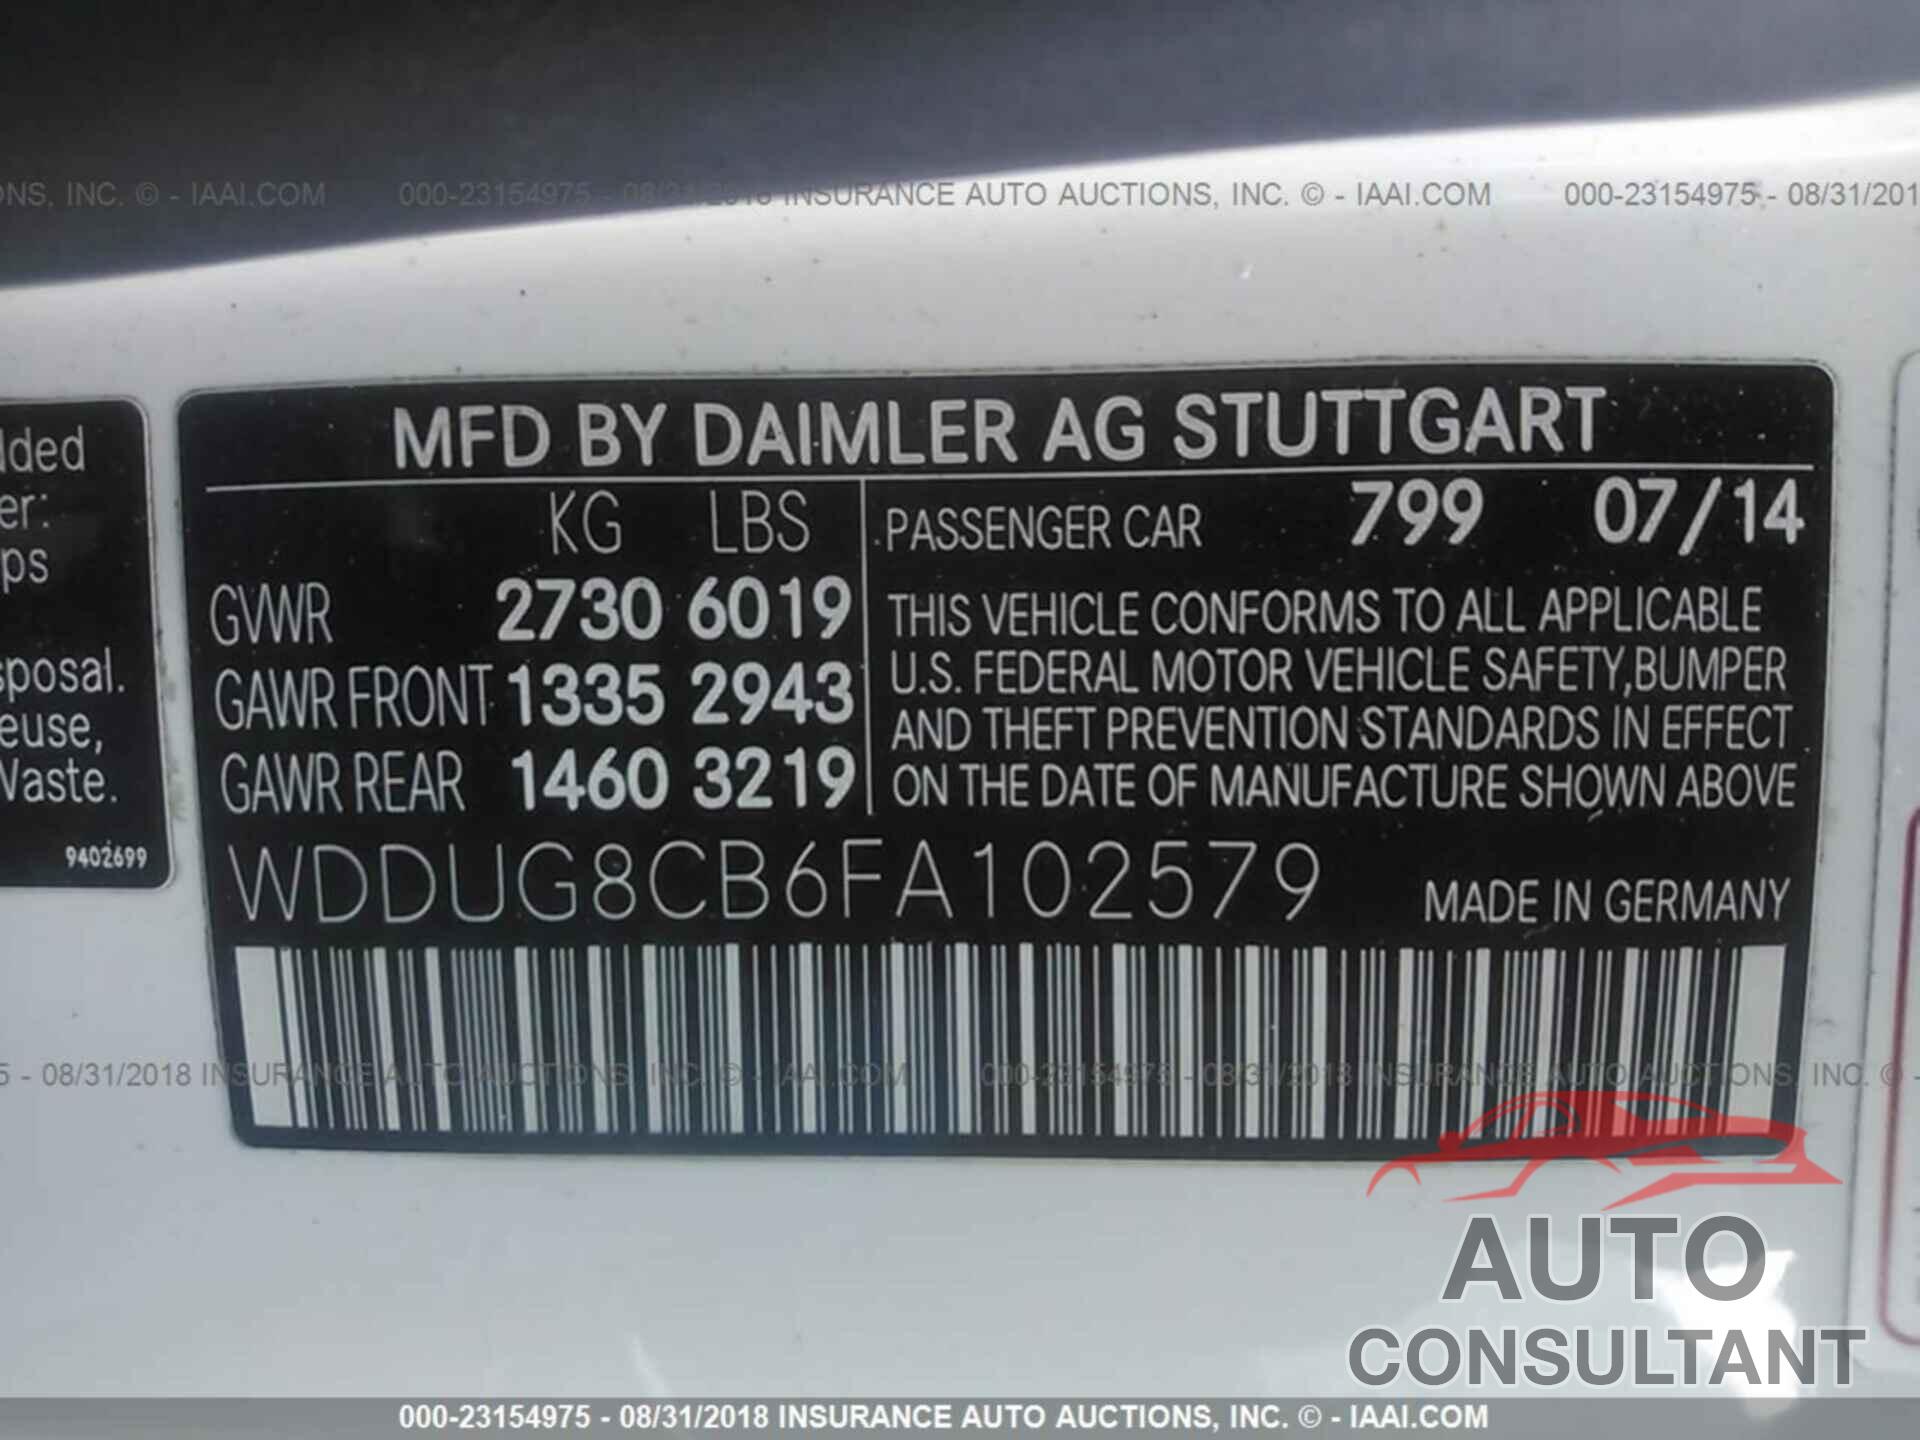 Mercedes-benz S 2015 - WDDUG8CB6FA102579